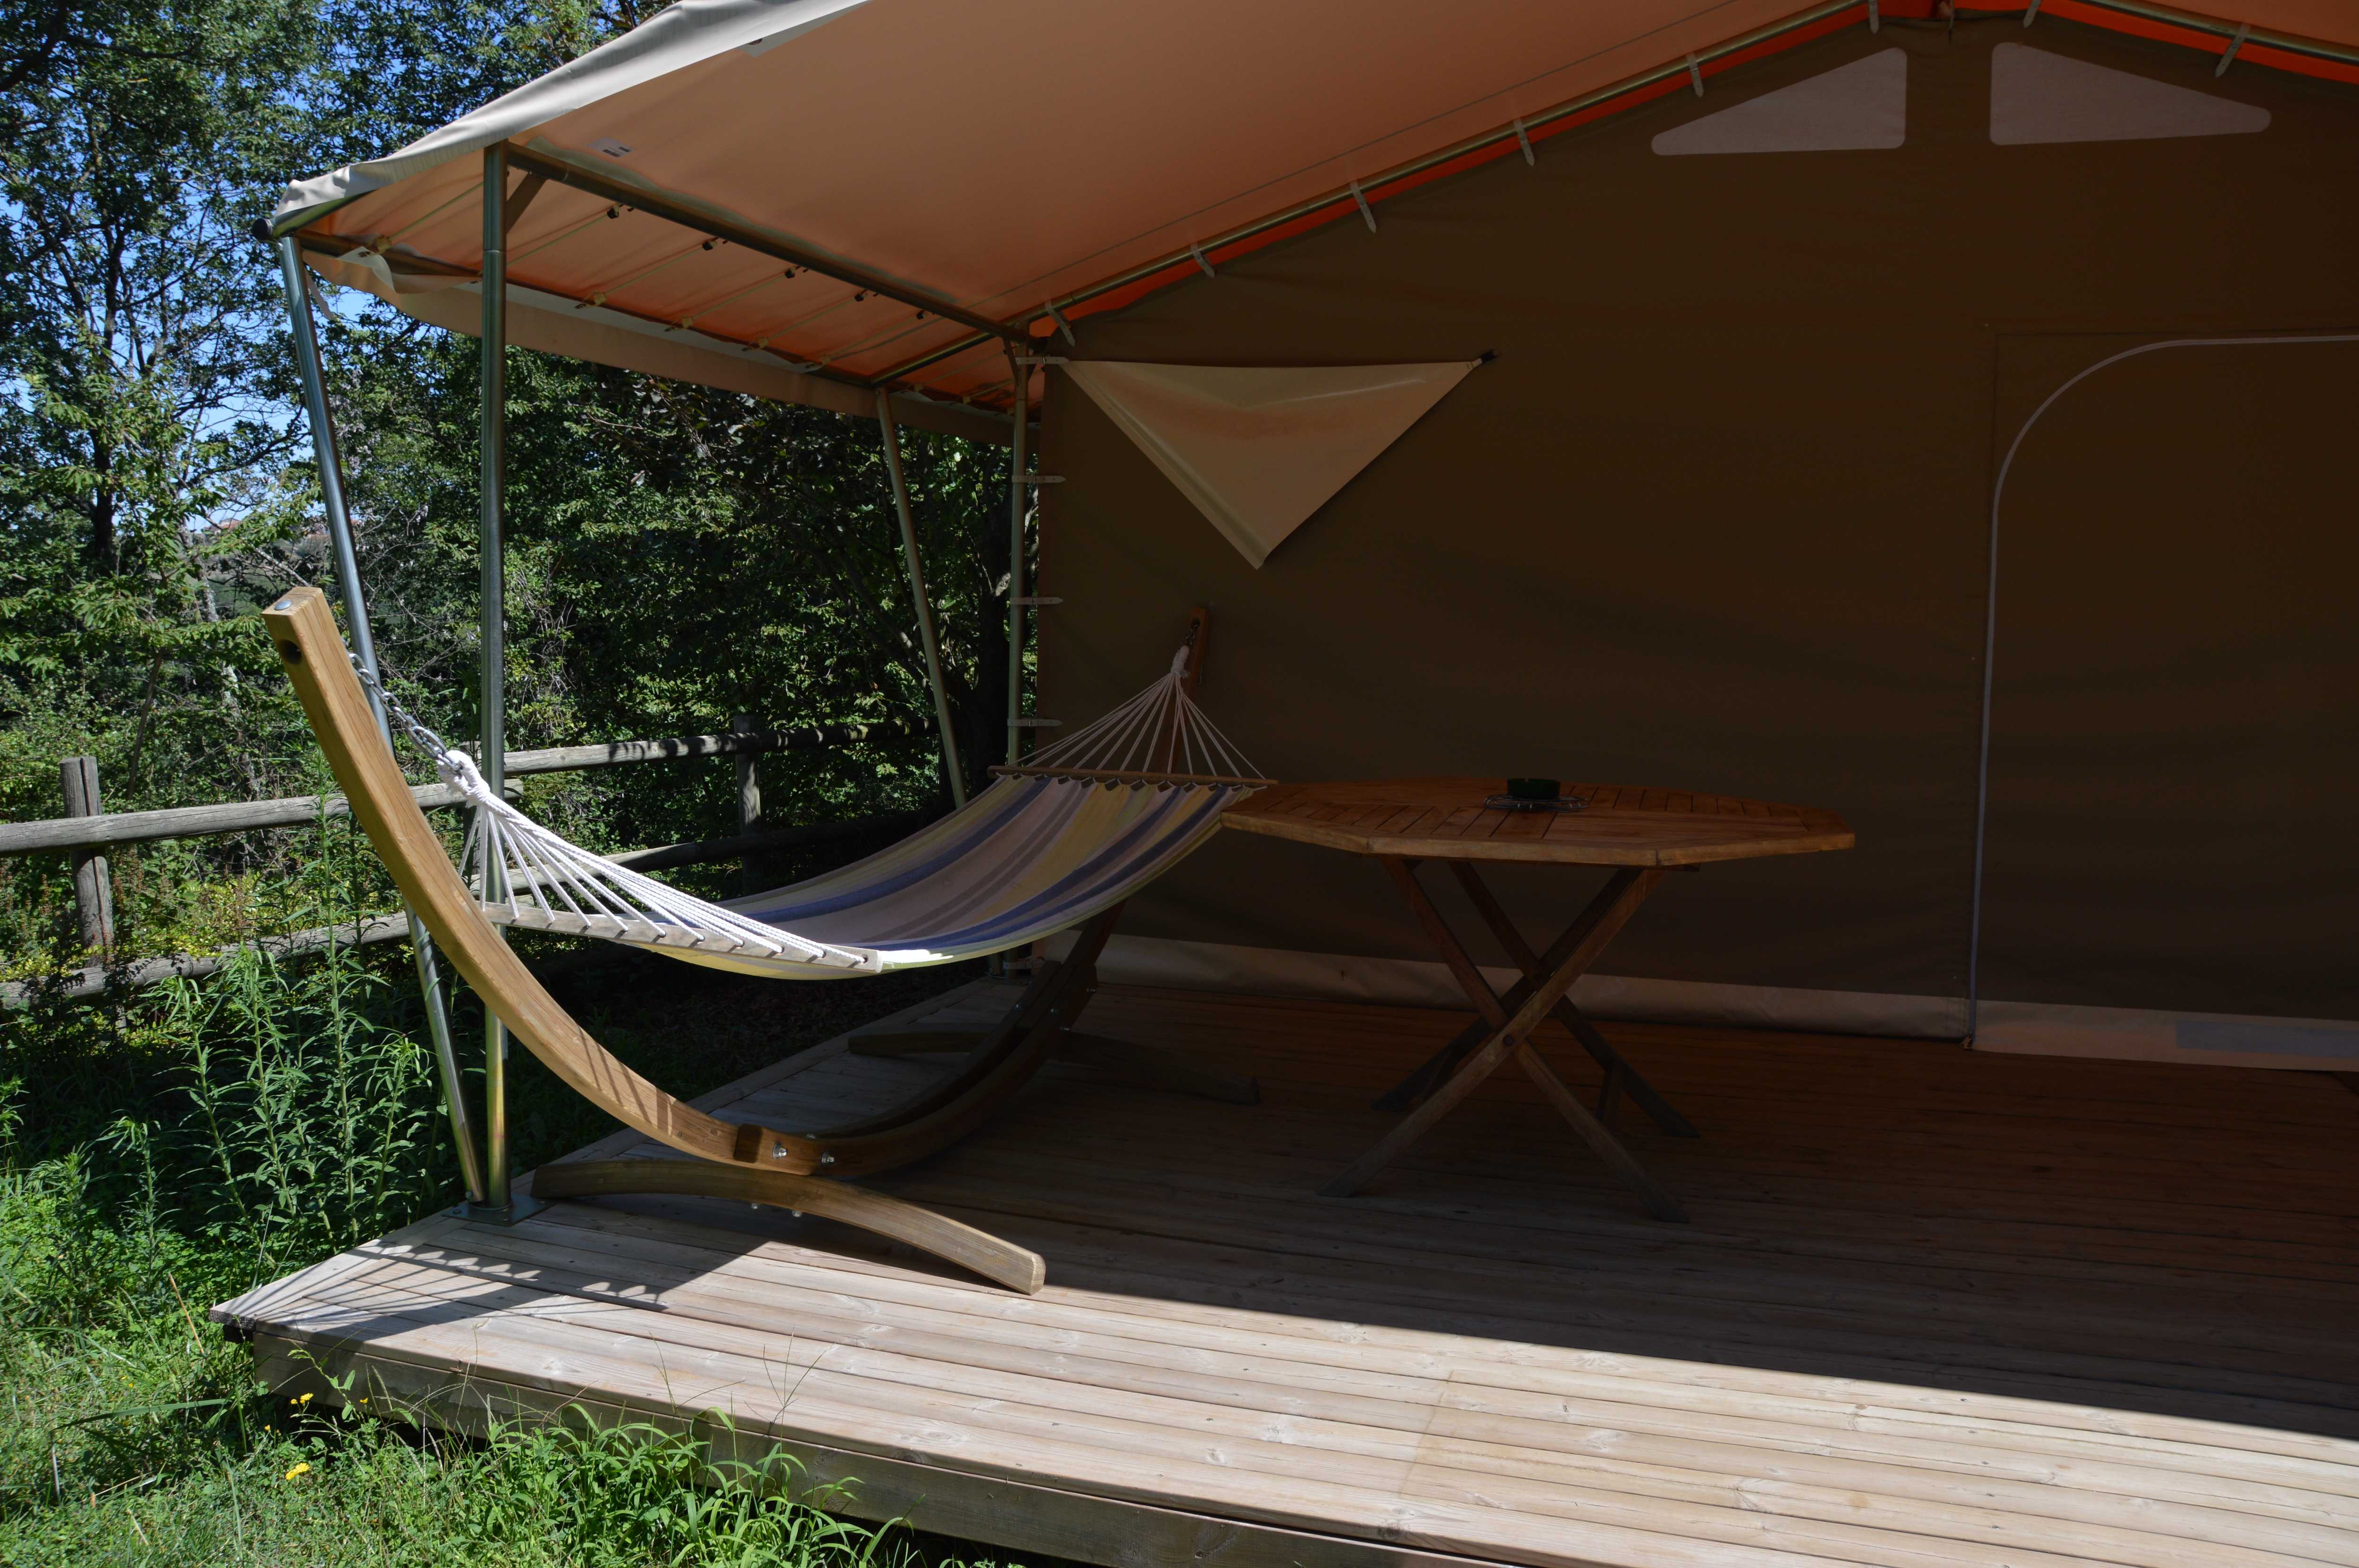 Huuraccommodatie - Lodge Canada Tent 2 Slaapkamers Zonder Sanitair 4 Personen, Overdekt Terras + 1 Hangmat - Sites et Paysages L'Oasis